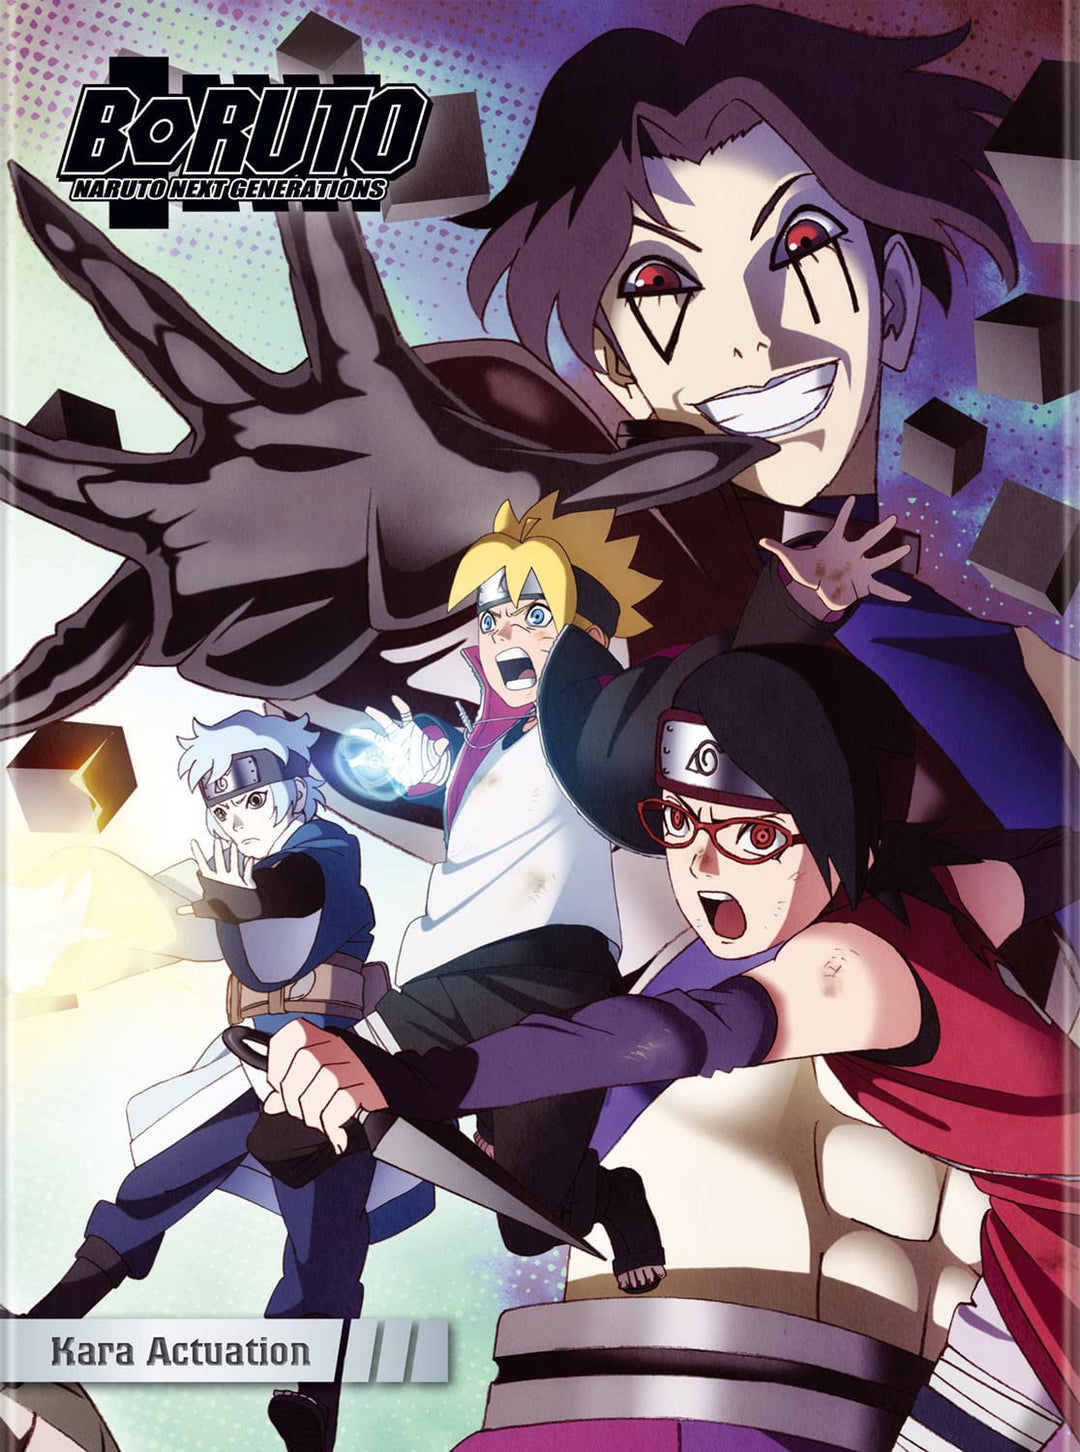 Boruto: Naruto Next Generations - Kara Actuation [DVD]